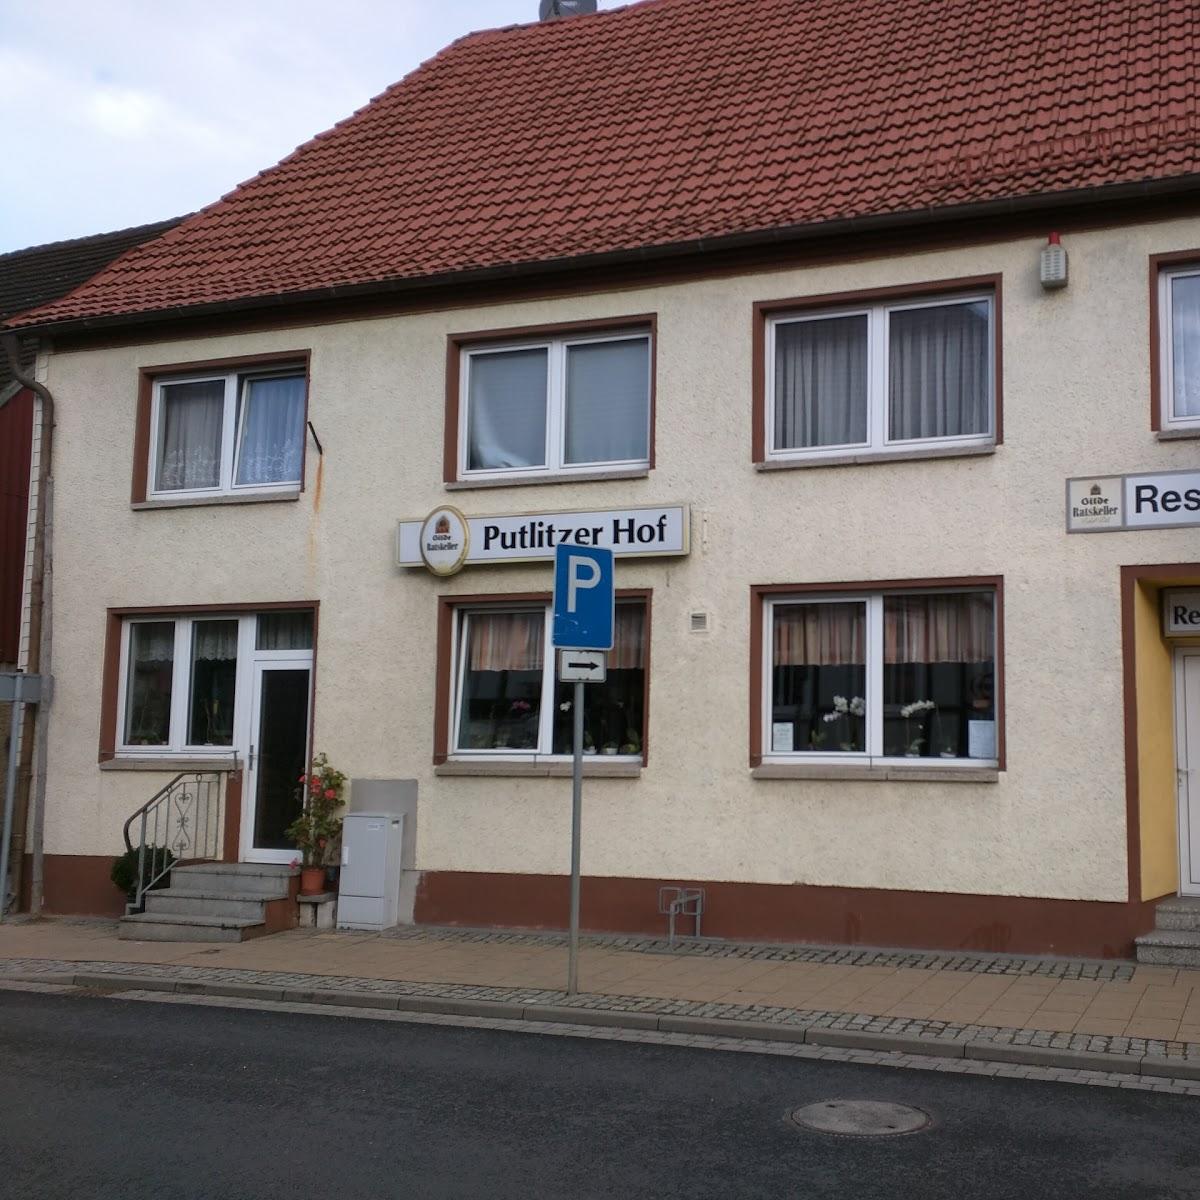 Restaurant "er Hof Inh. Horst Schlapmann" in Putlitz